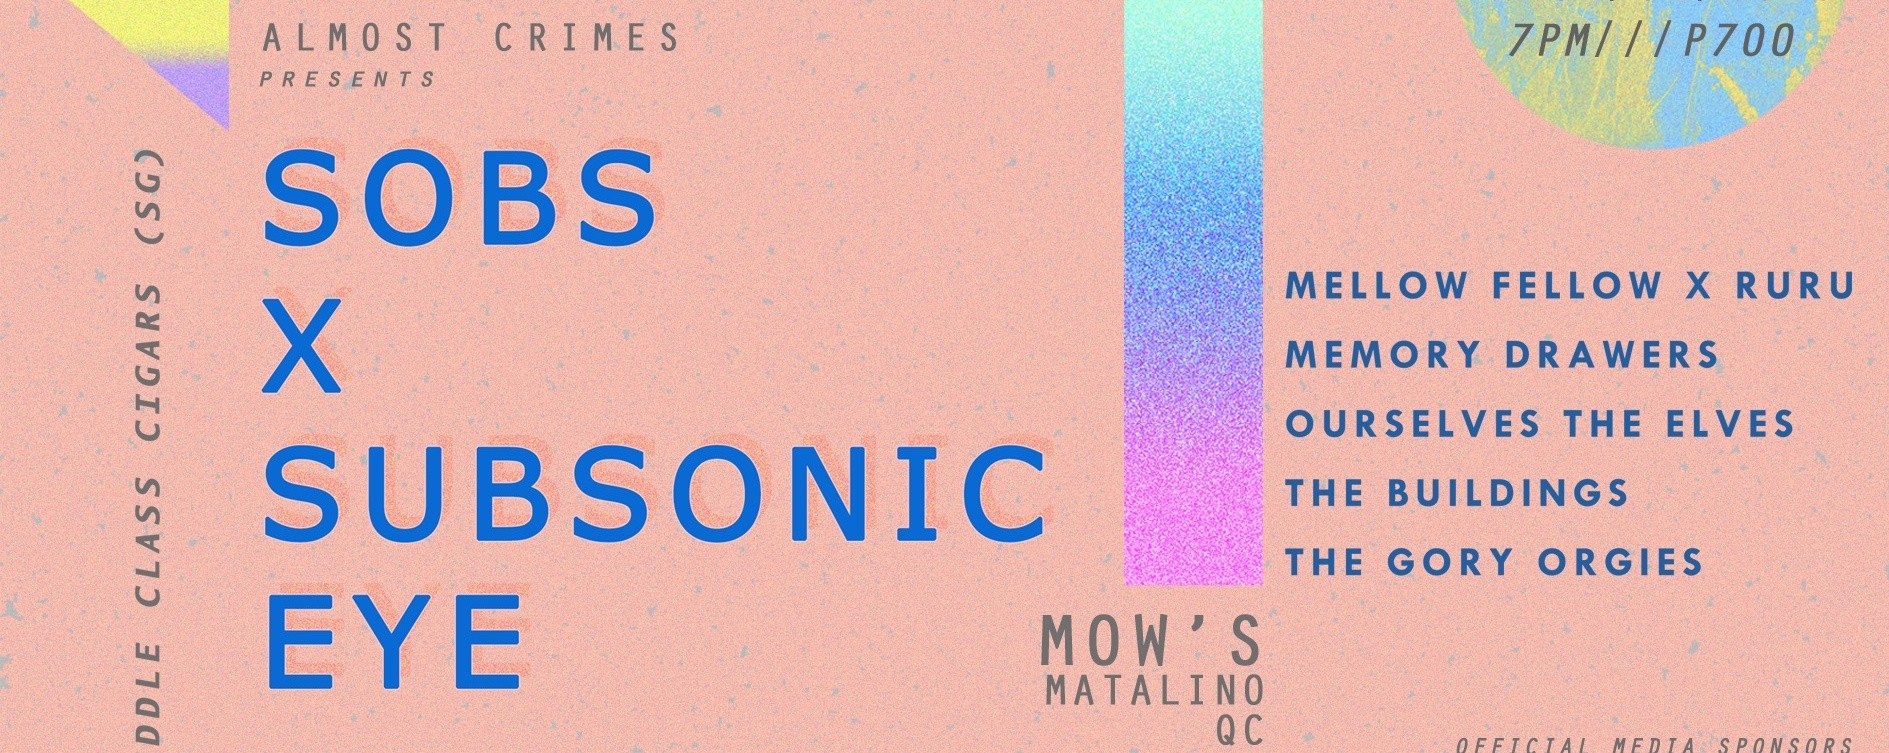 Sobs x Subsonic Eye (SG) Live in Manila